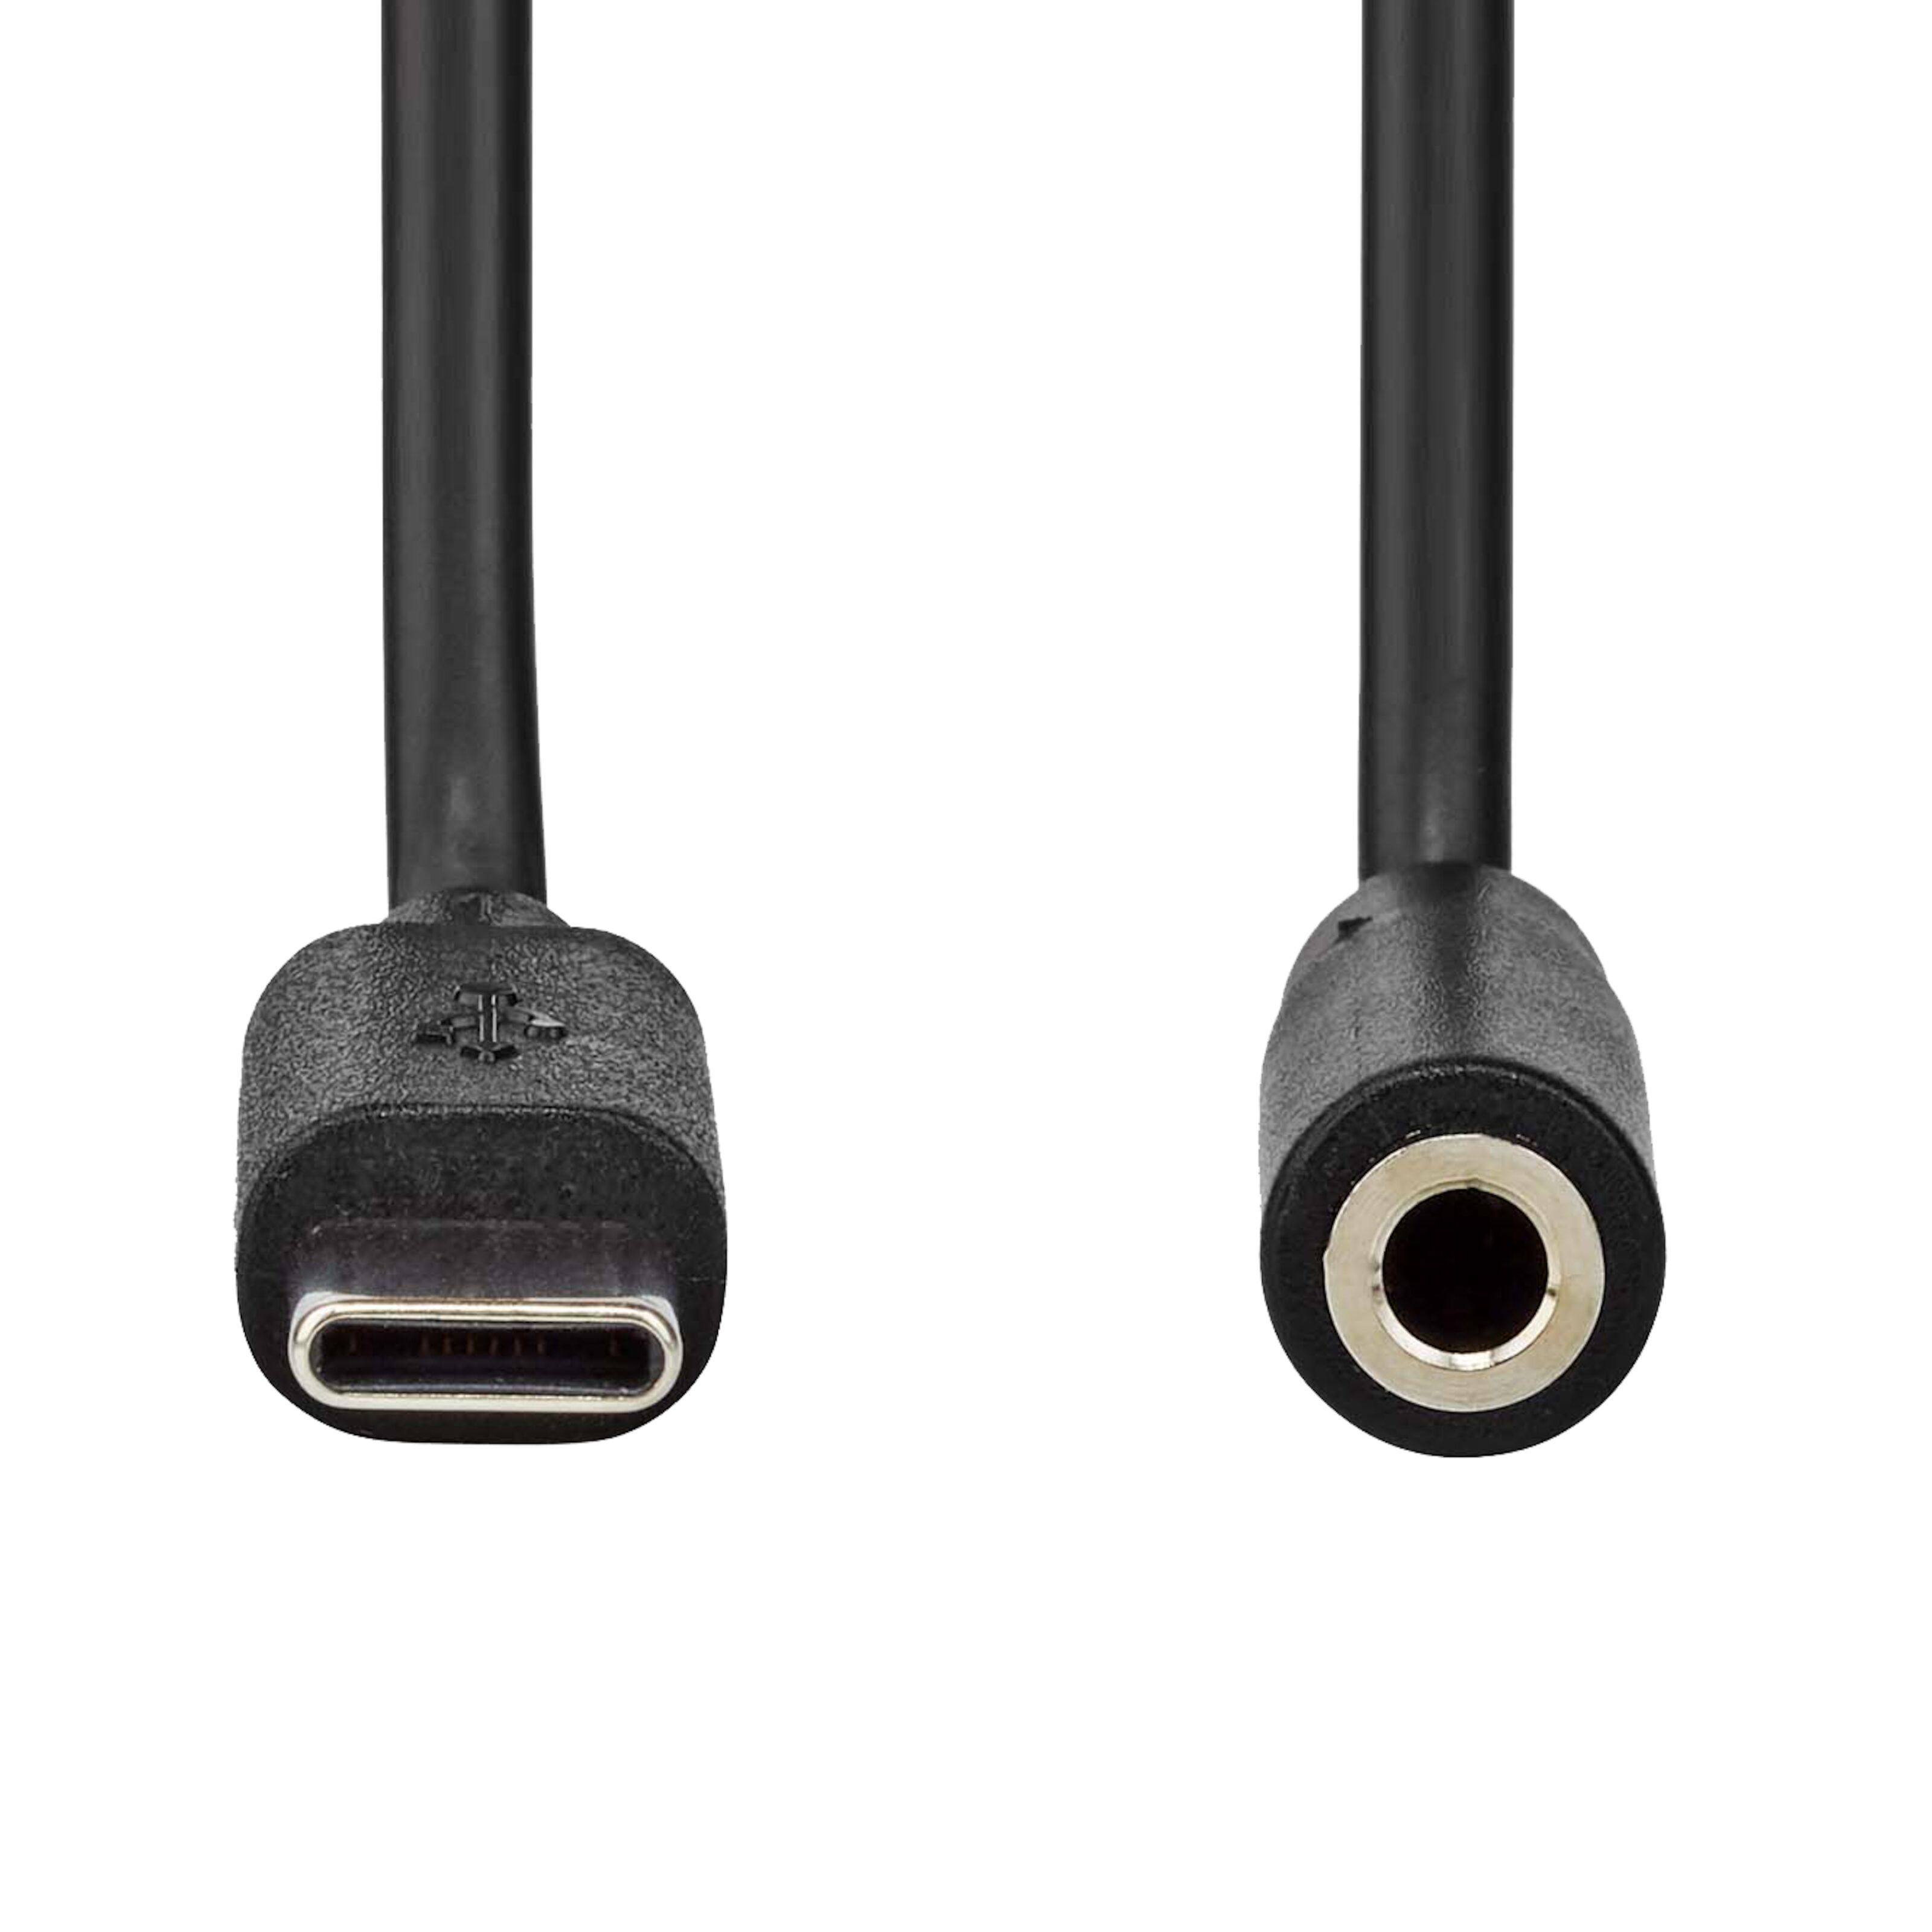 USB-C - USB-adapter, USB-C till USB-A, Nedis